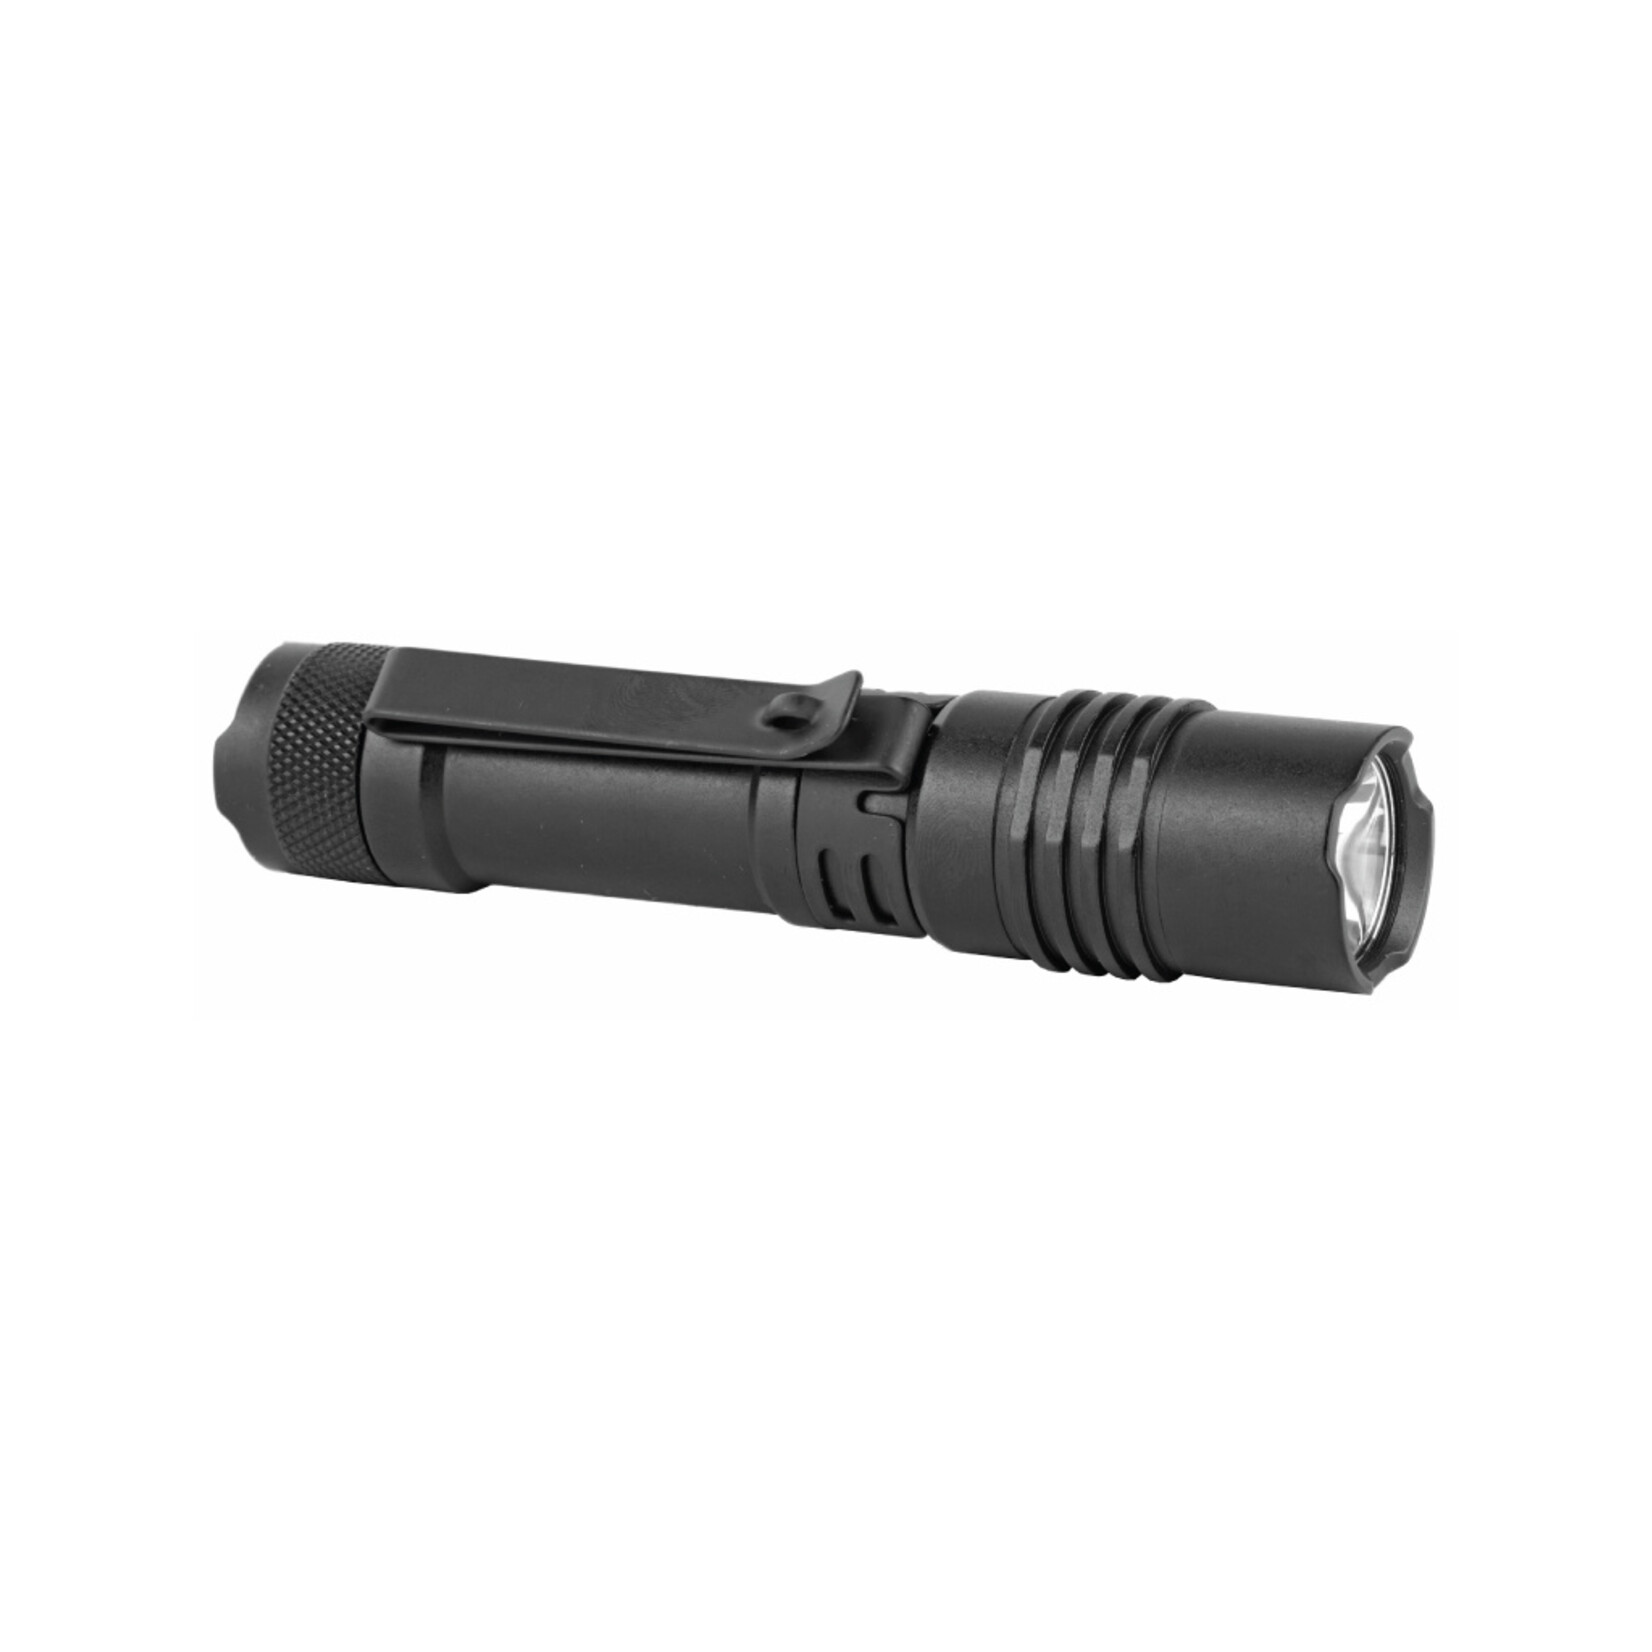 Streamlight Protac 1L-1Aa Everyday Carry Flashlight